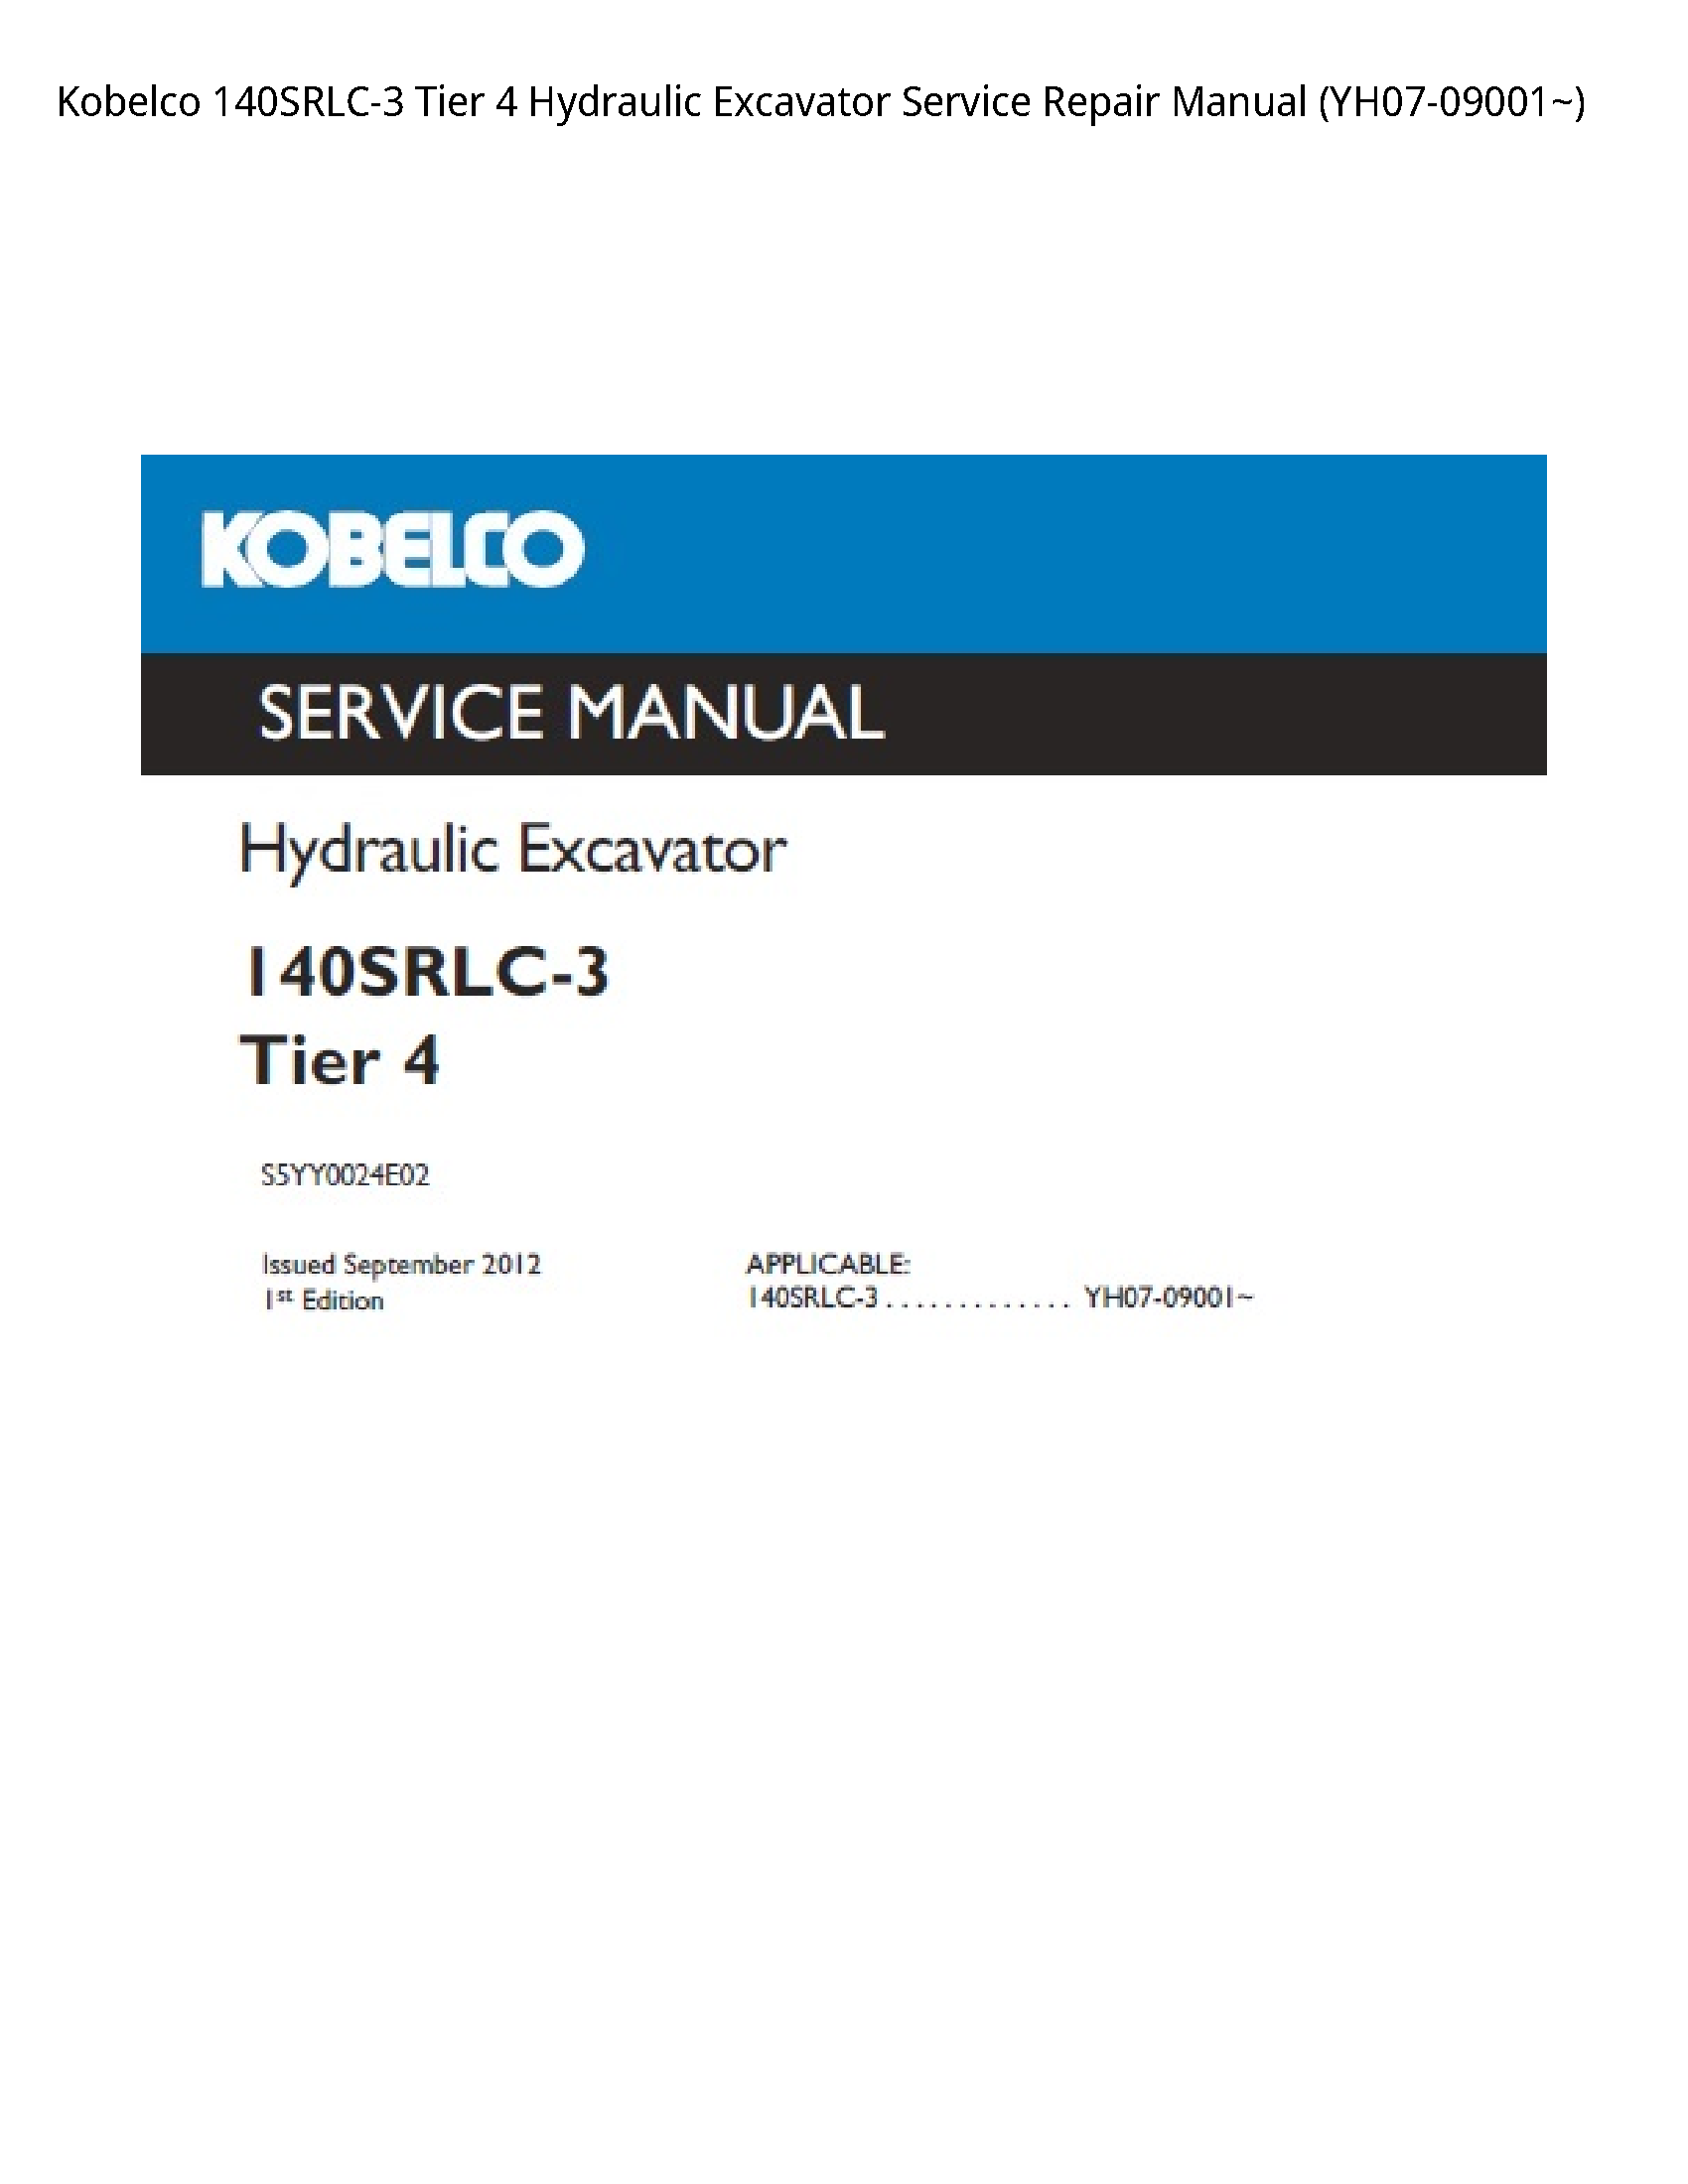 Kobelco 140SRLC-3 Tier Hydraulic Excavator manual